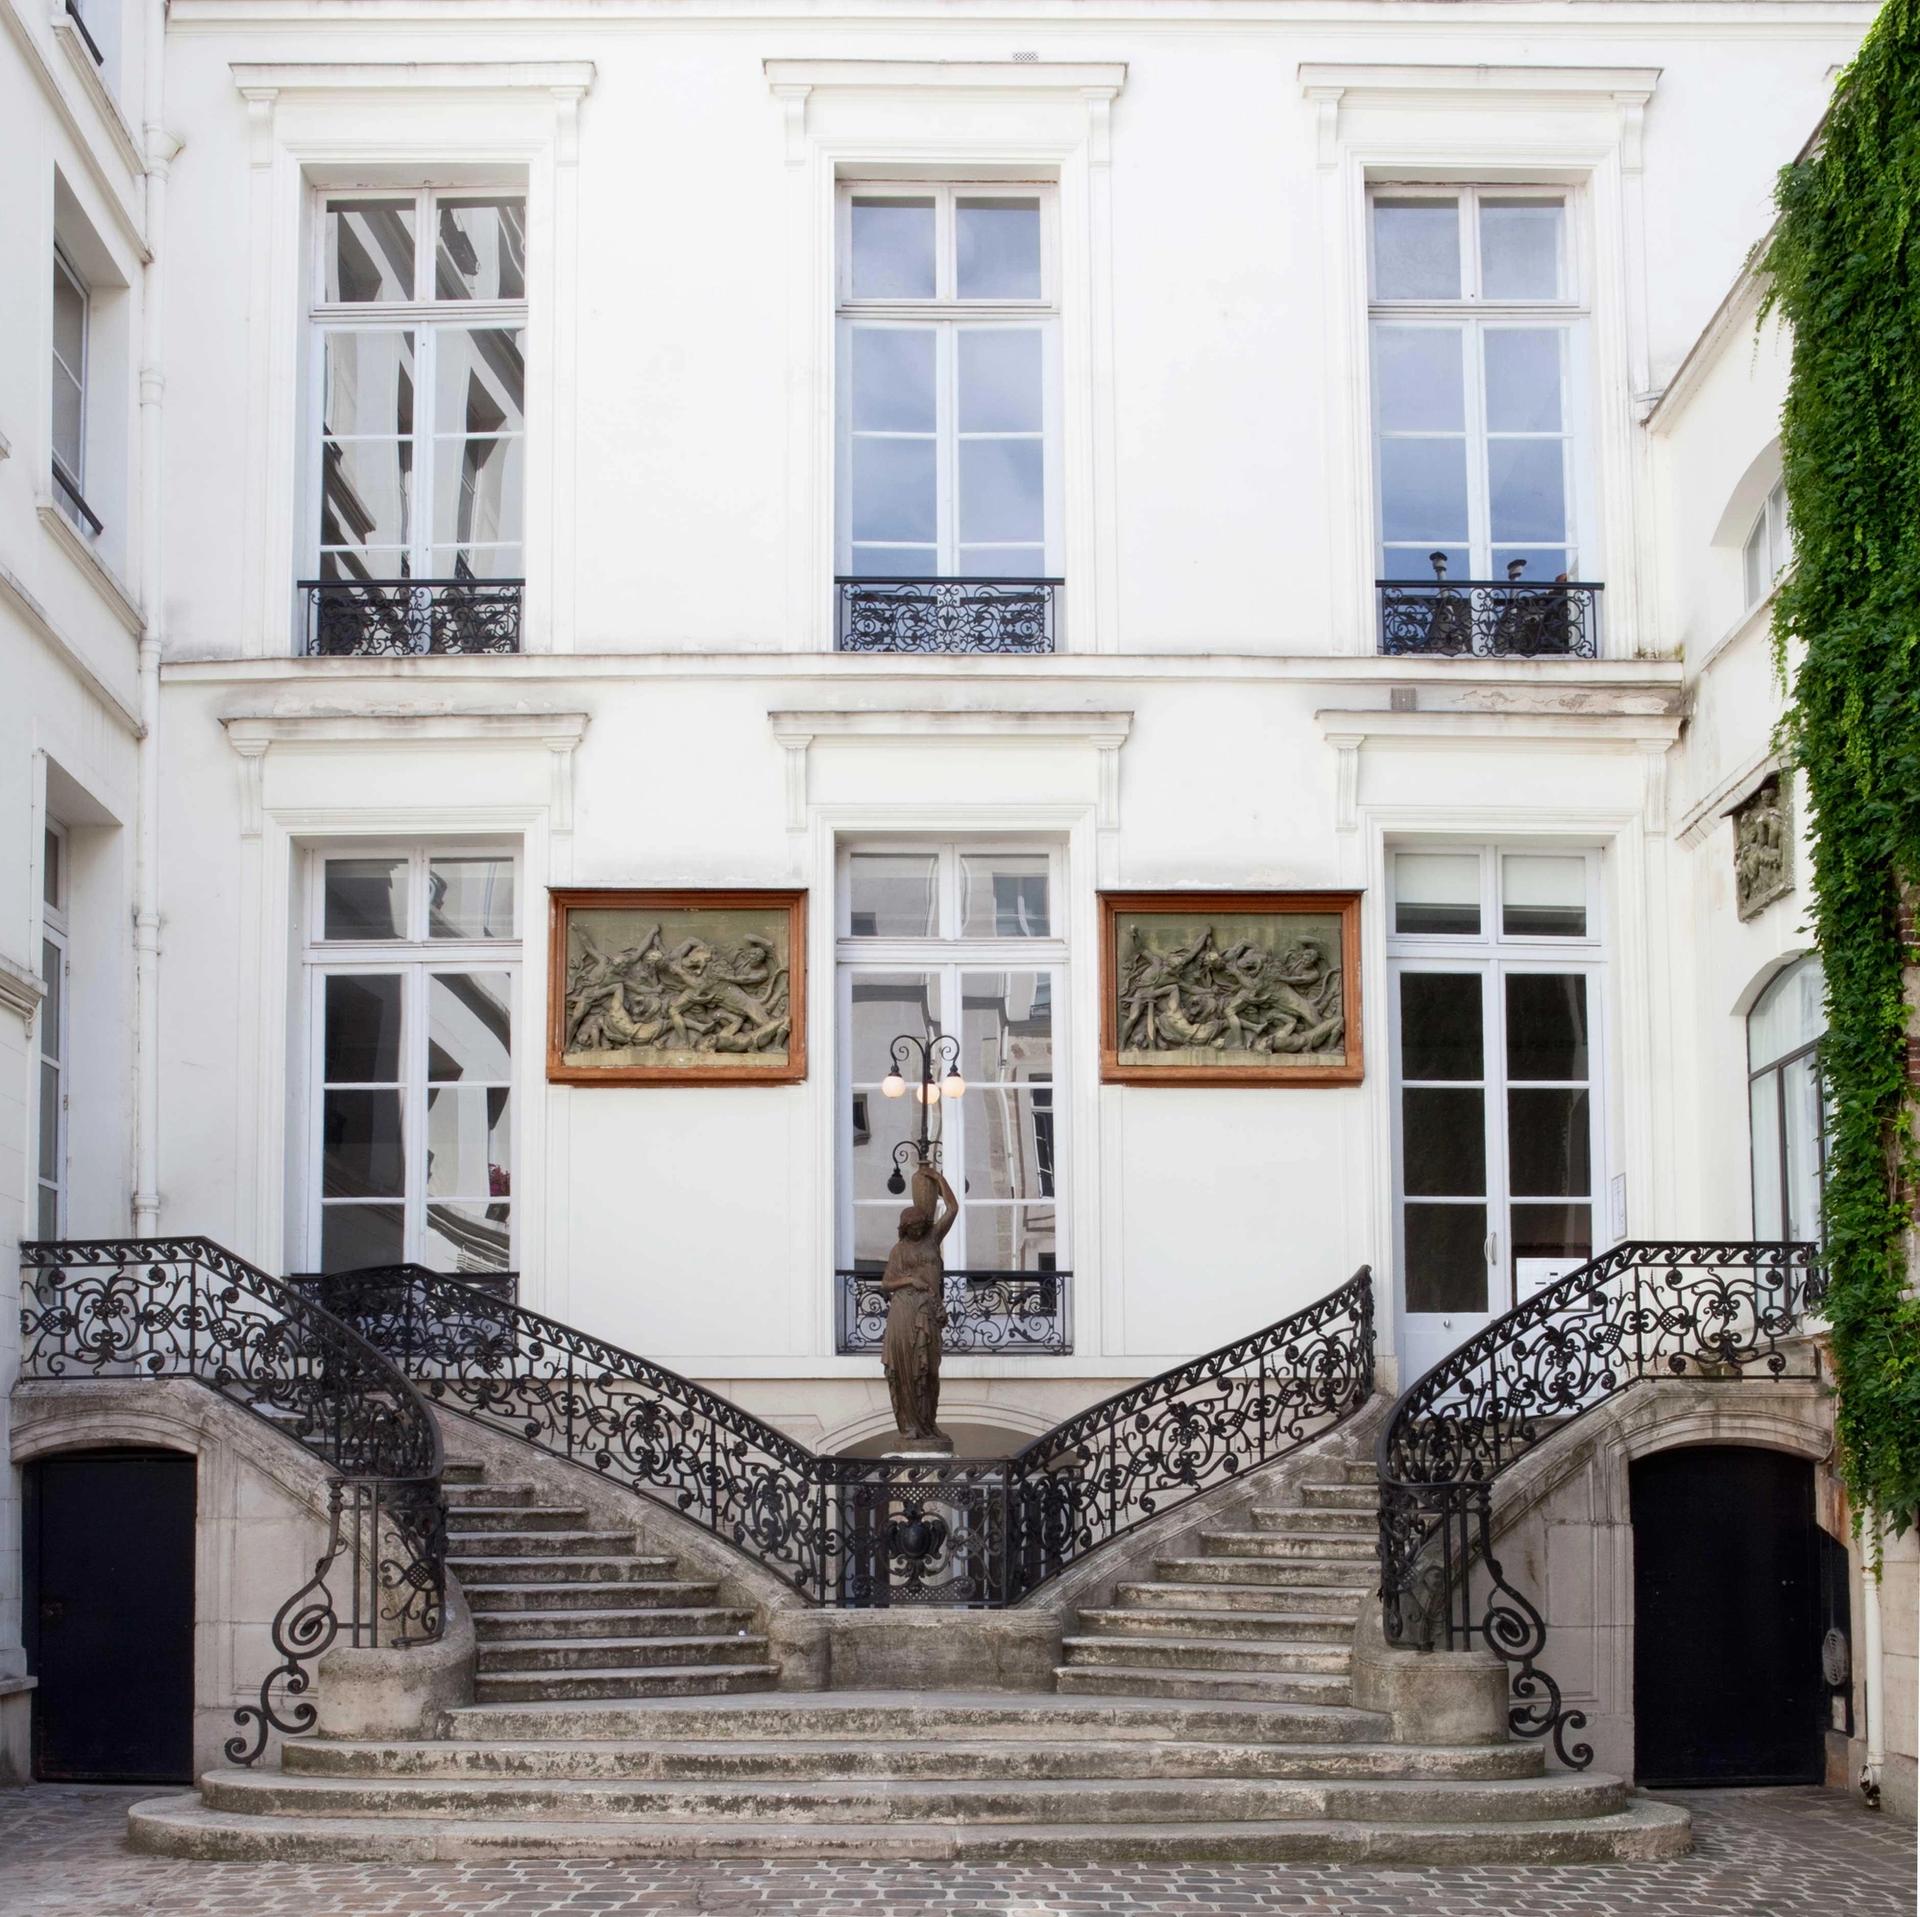 La galerie Perrotin, rue de Turenne à Paris. Courtesy de la galerie Perrotin 